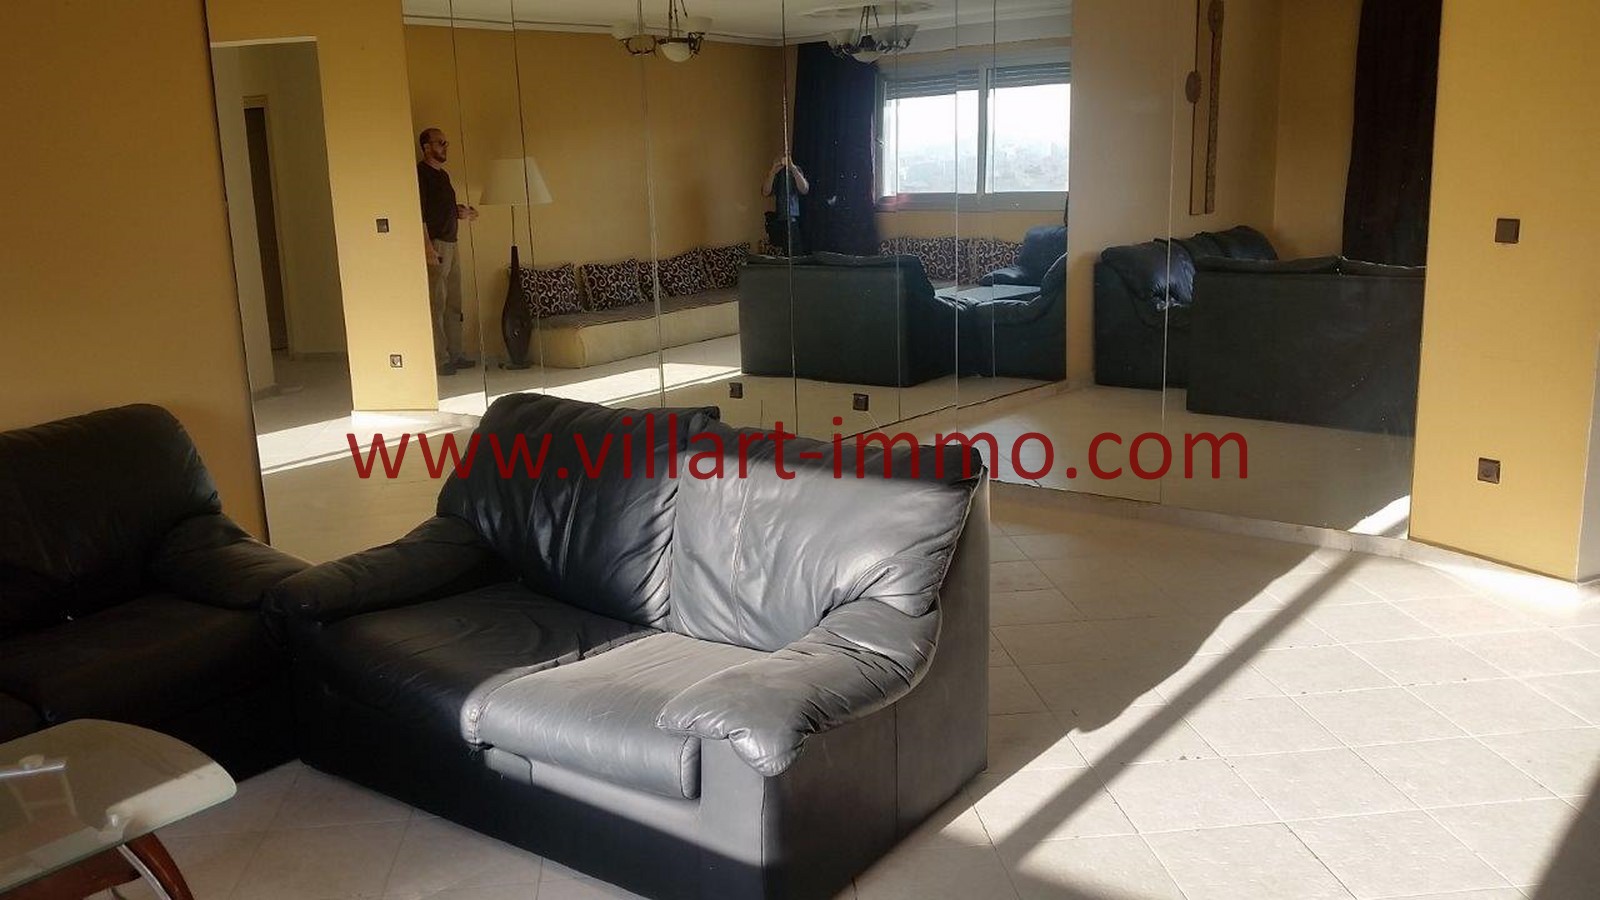 2-location-appartement-meubles-tanger-iberia-salon-2-l1012-villart-immo-maroc